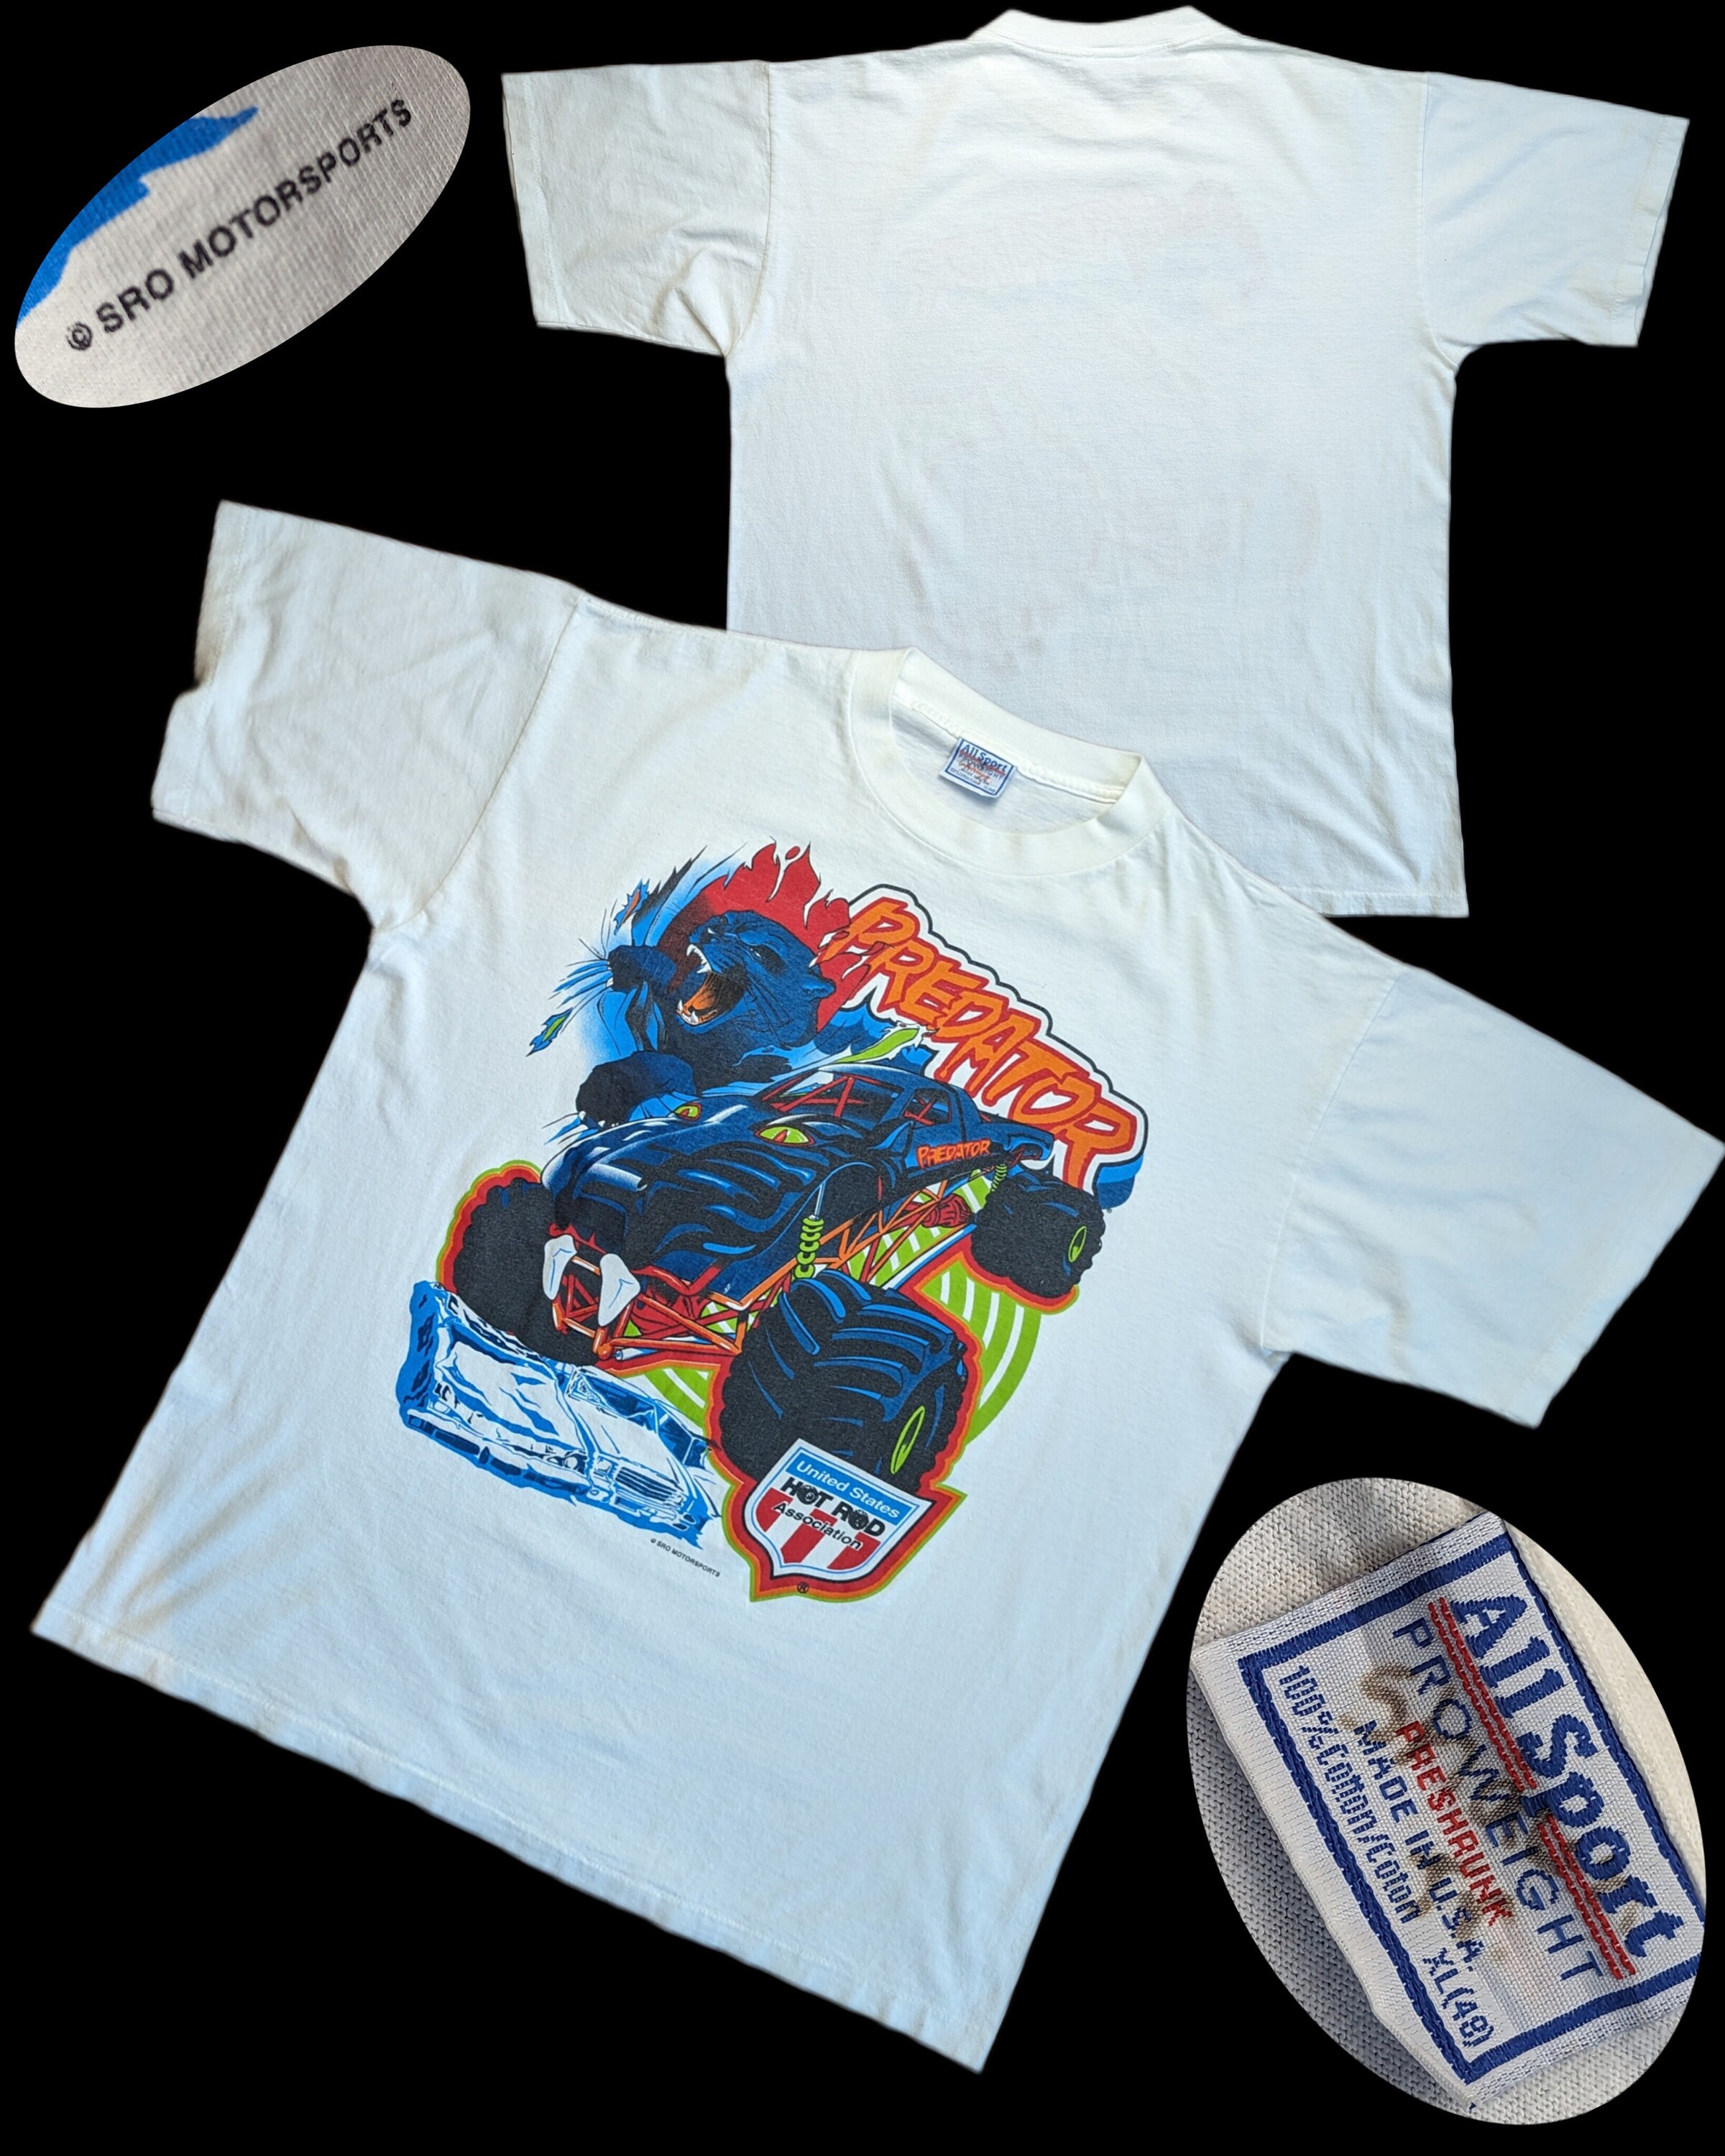 Vintage 1994 Predator US Hot Rod Association Monster Truck T-Shirt